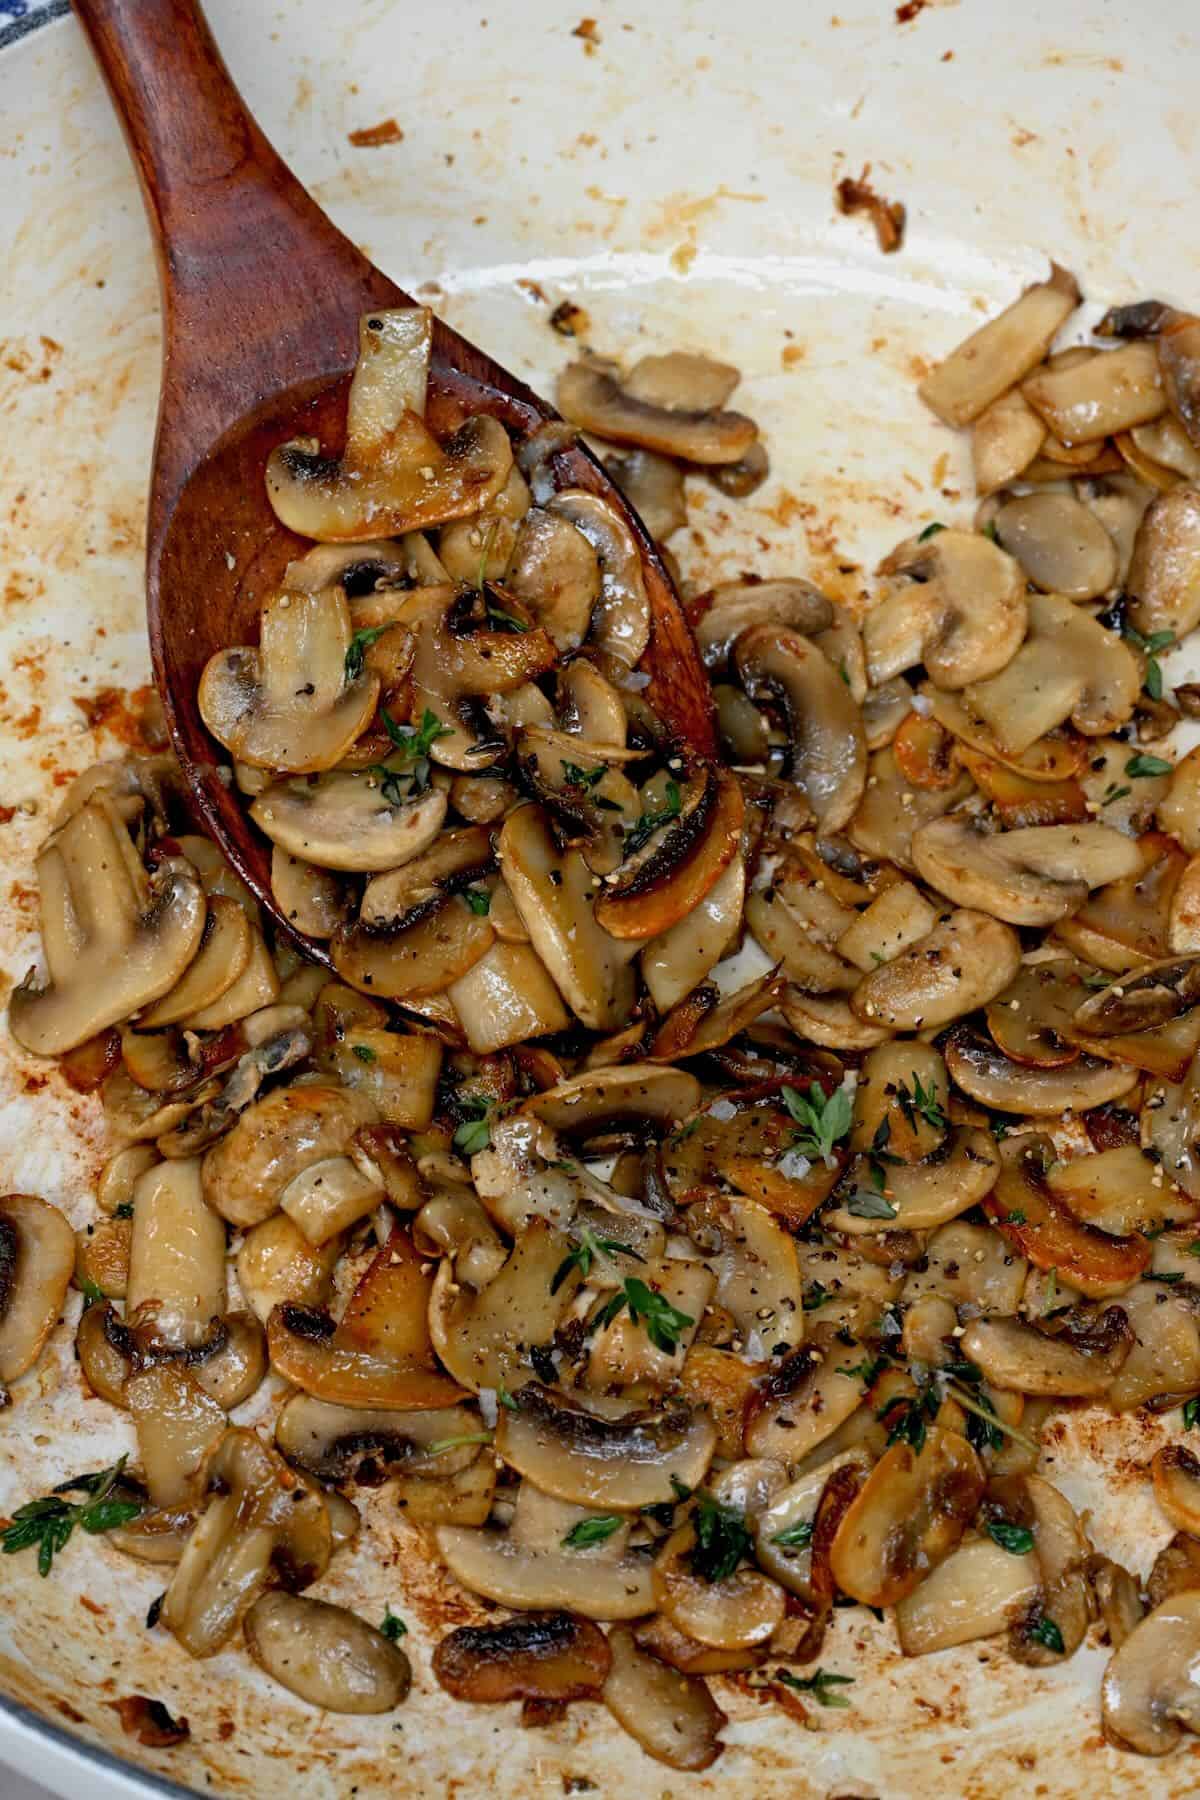 Sauteed mushrooms in a pan